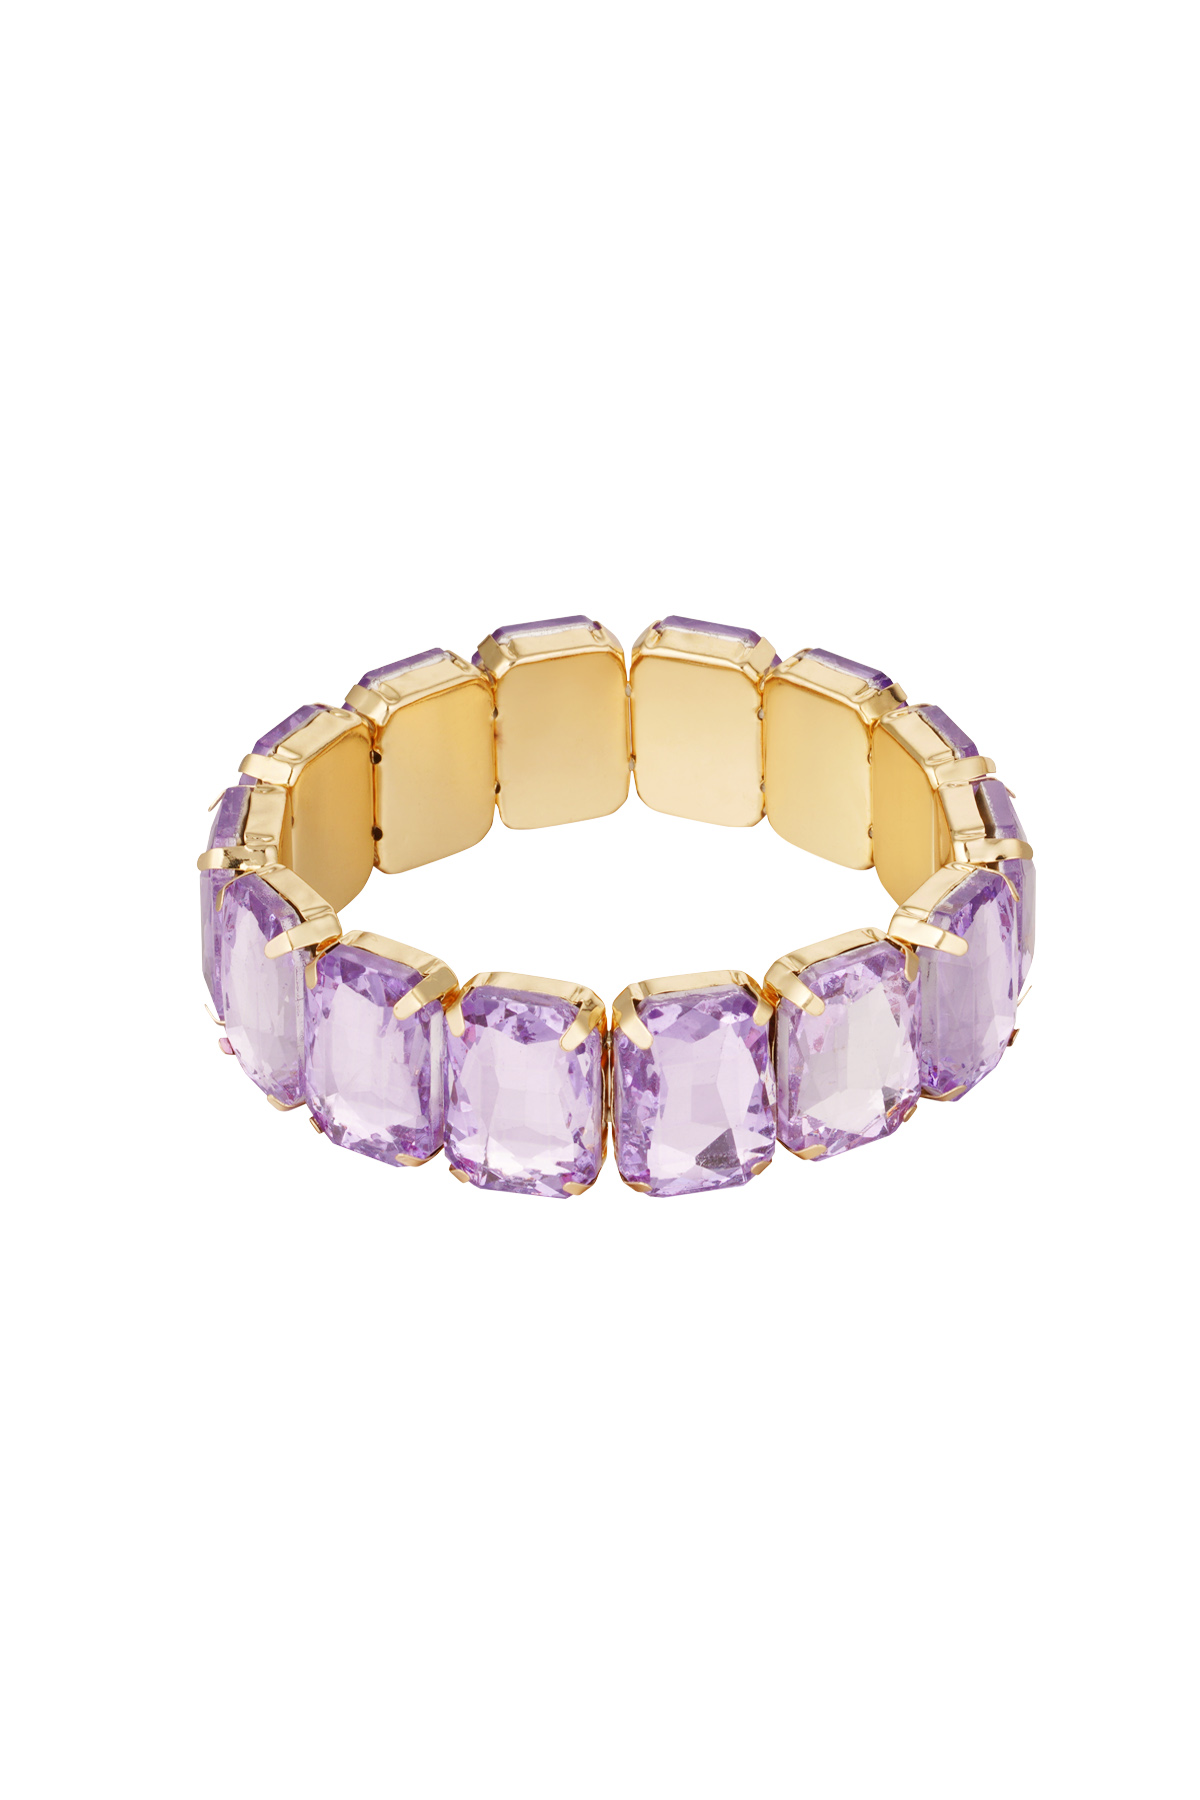 Slave bracelet large stones - gold/lilac 